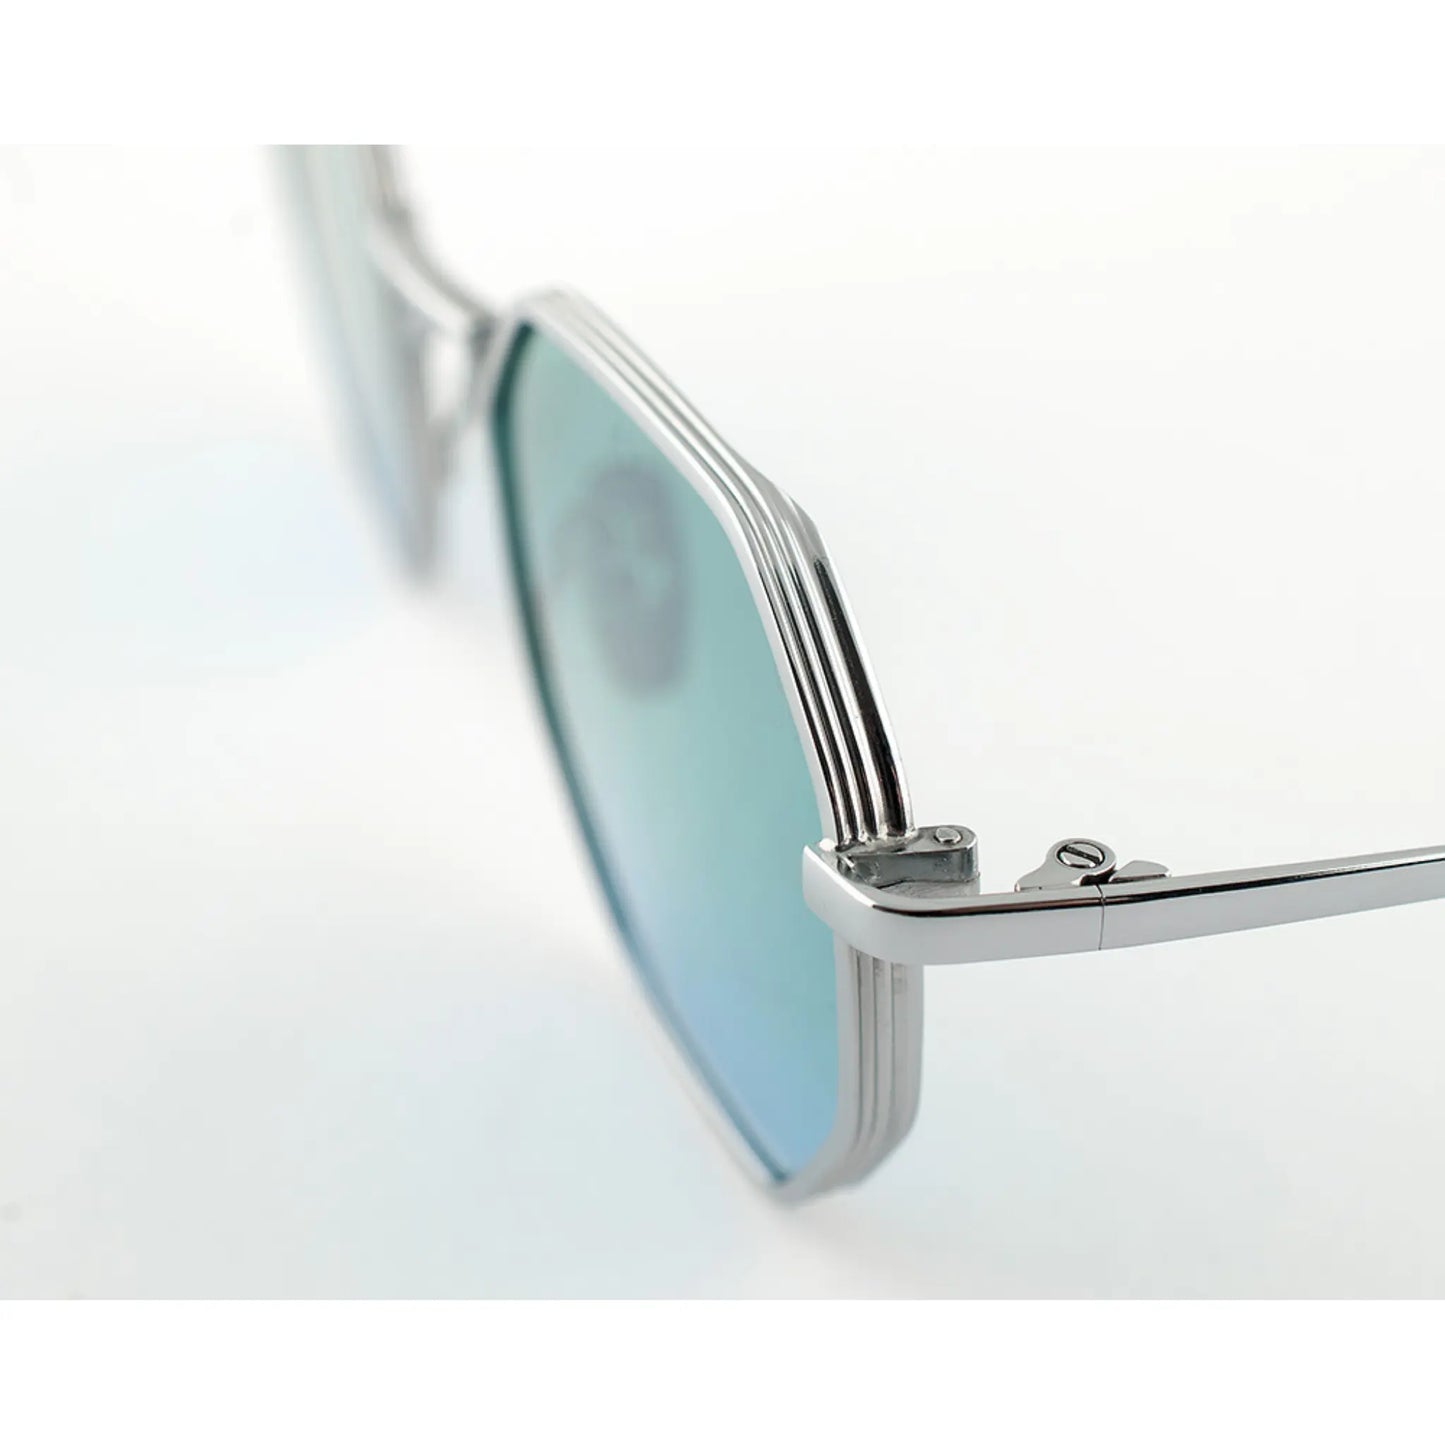 Eyepetizer sunglasses VAN C.1-43F-04